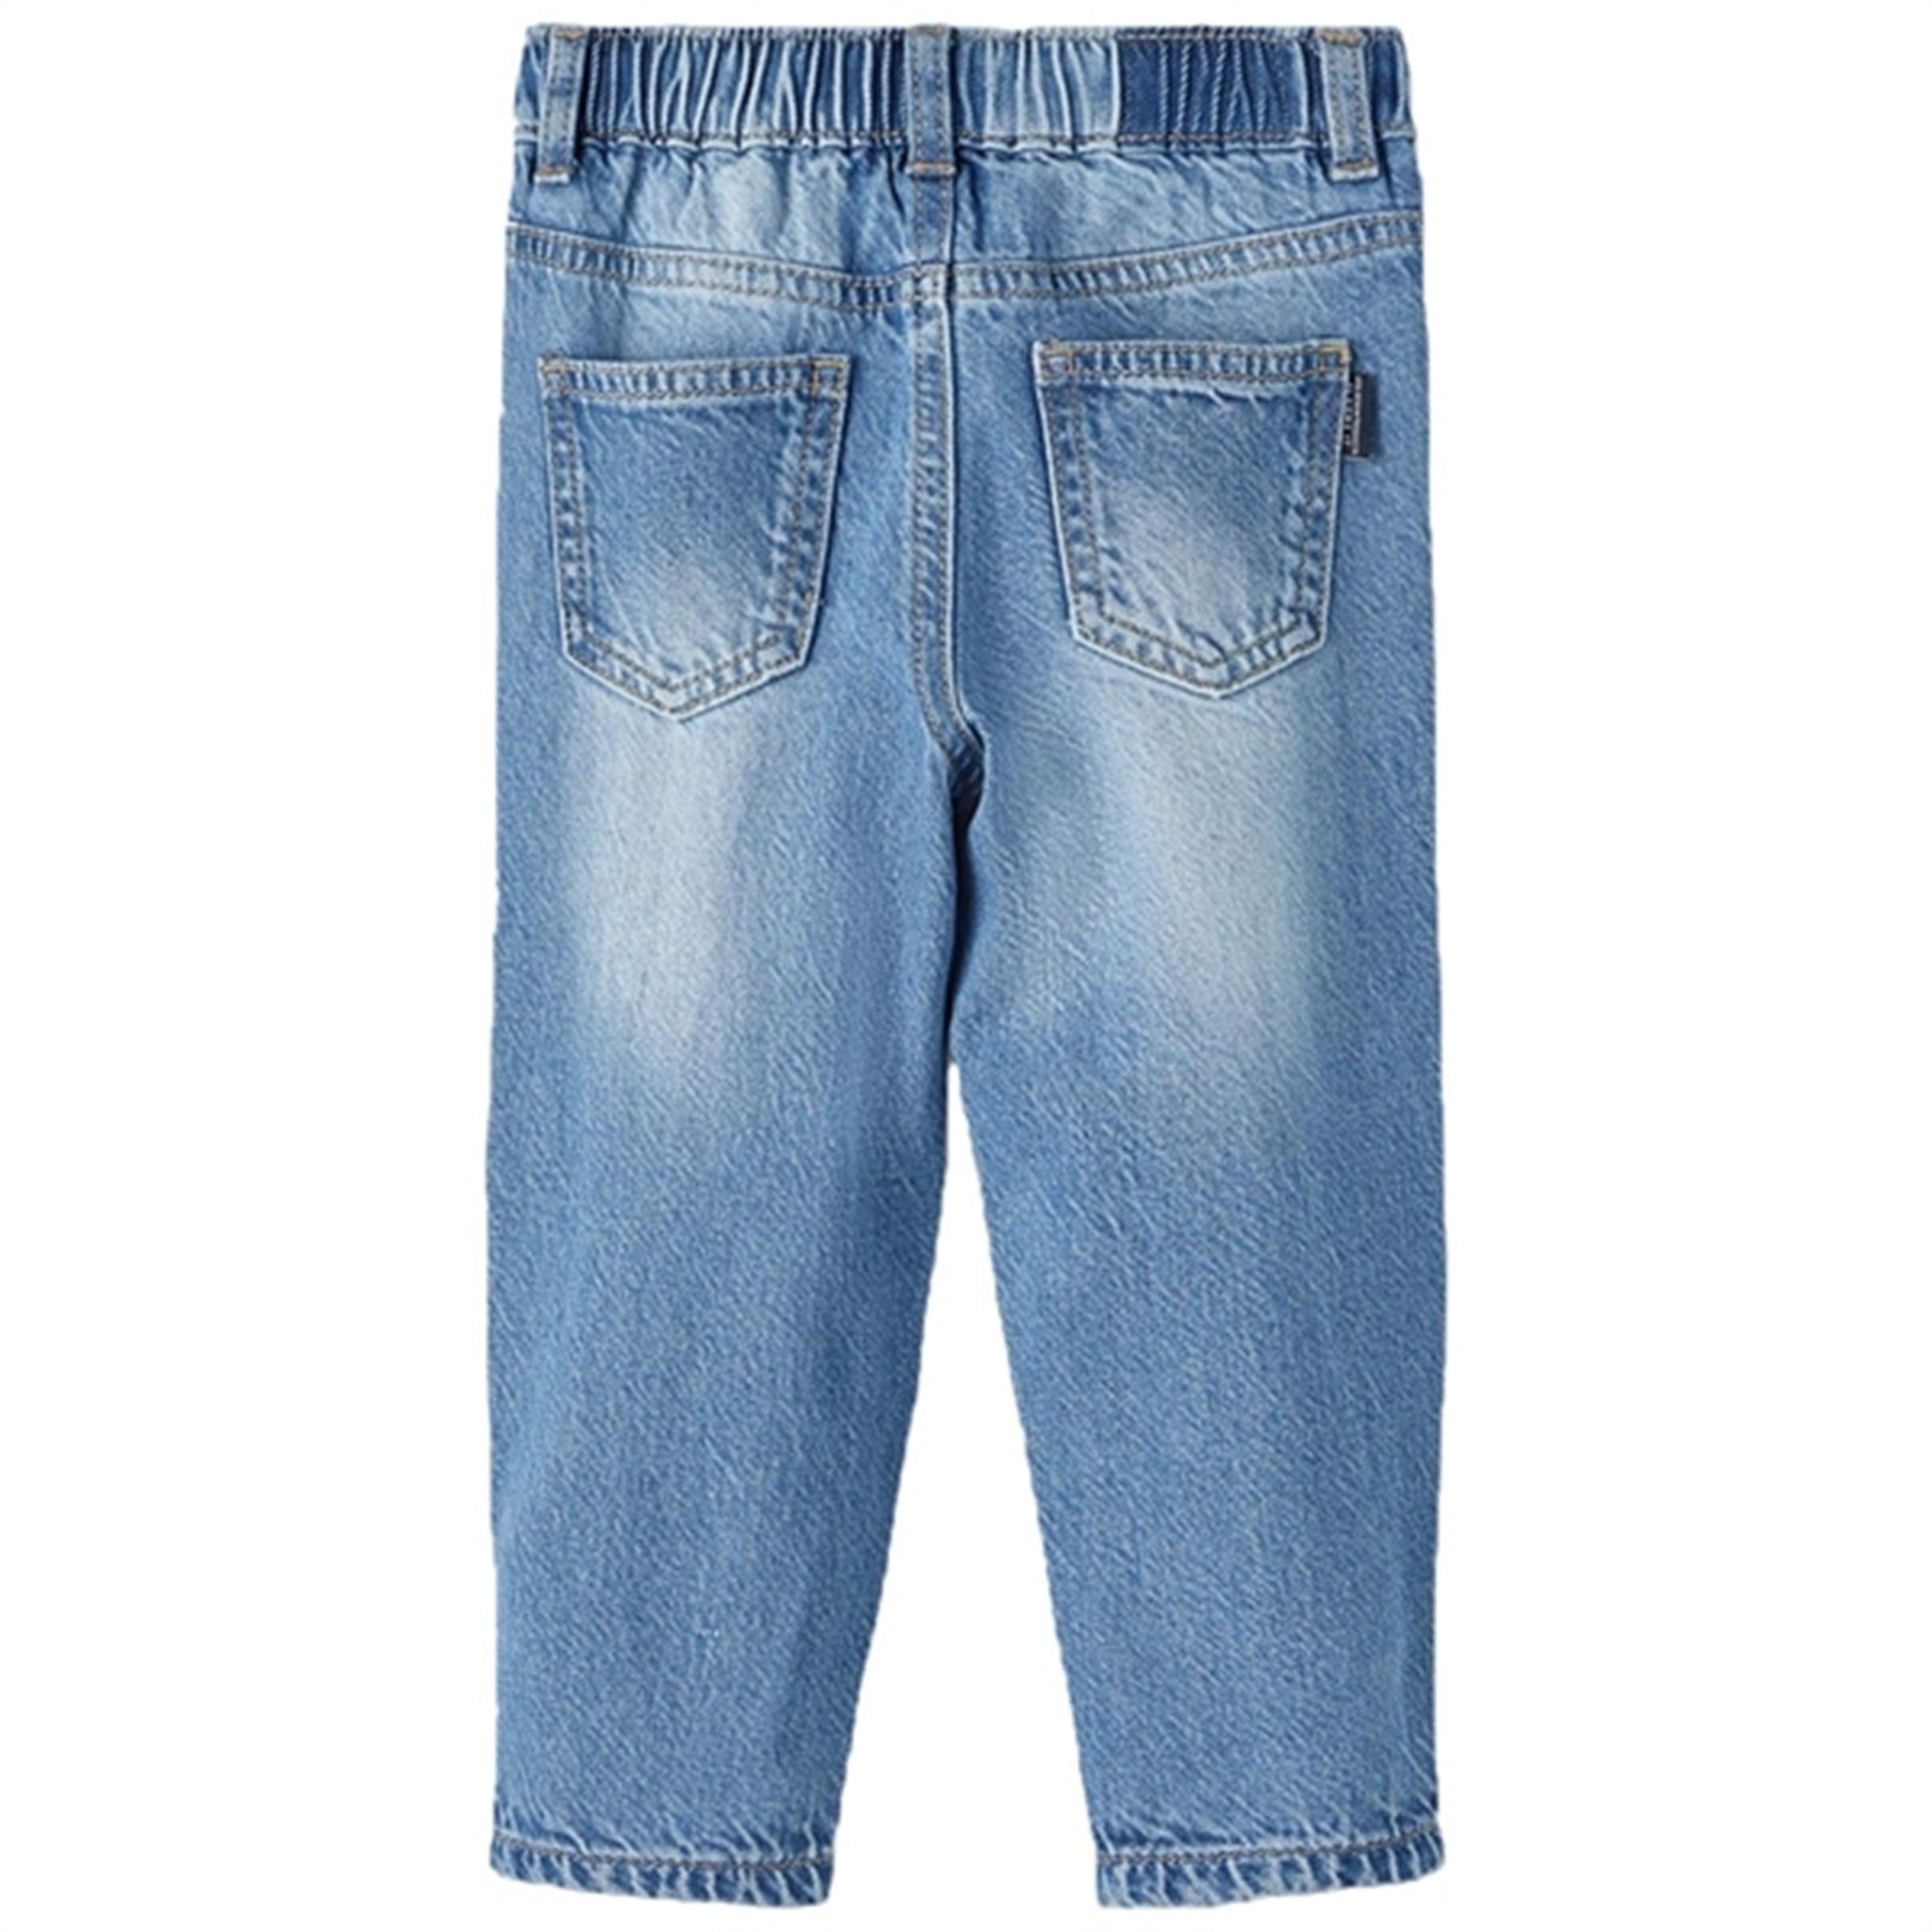 Name it Medium Blue Denim Sydney Tapered Jeans Noos 5